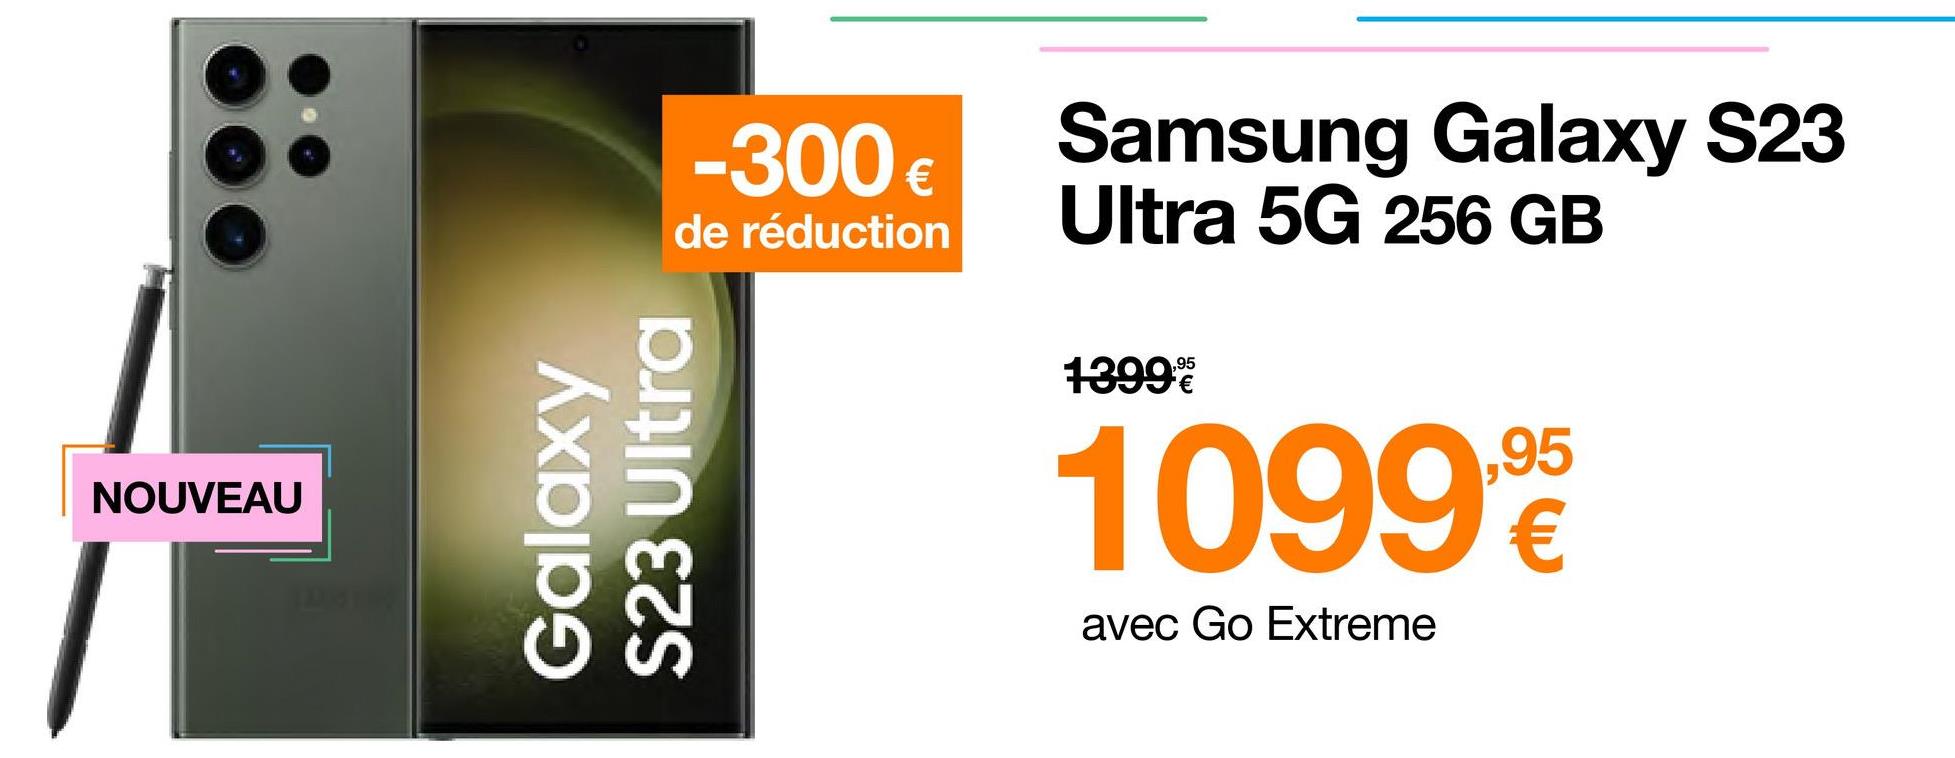 NOUVEAU
-300 €
de réduction
Galaxy
S23 Ultra
Samsung Galaxy S23
Ultra 5G 256 GB
1399%
10999
€
avec Go Extreme
,95